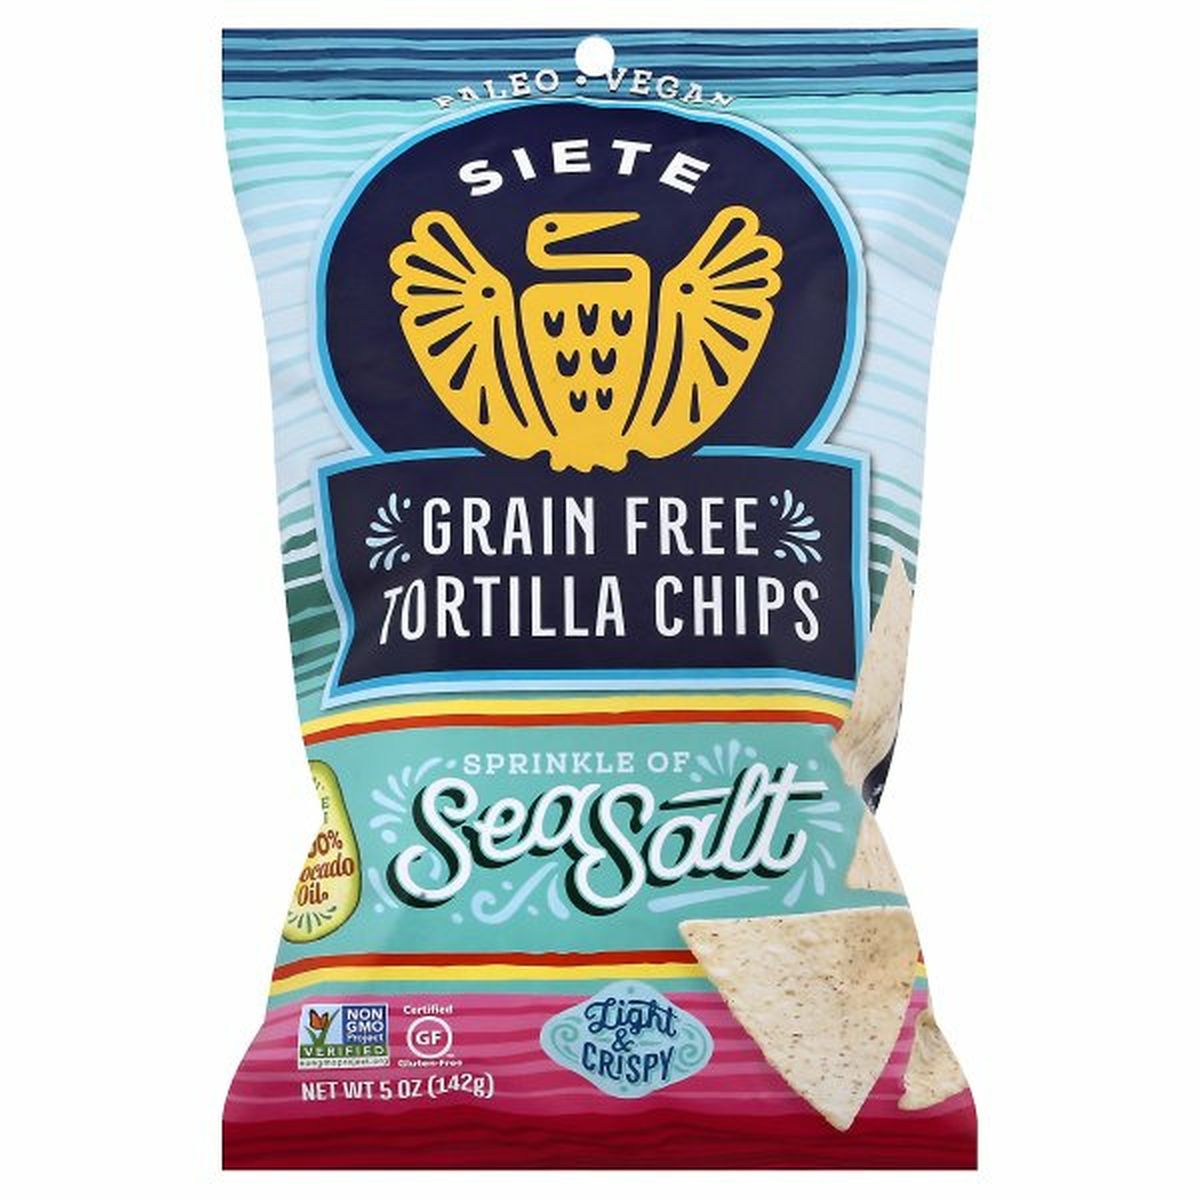 Calories in Siete Tortilla Chips, Grain Free, Sea Salt